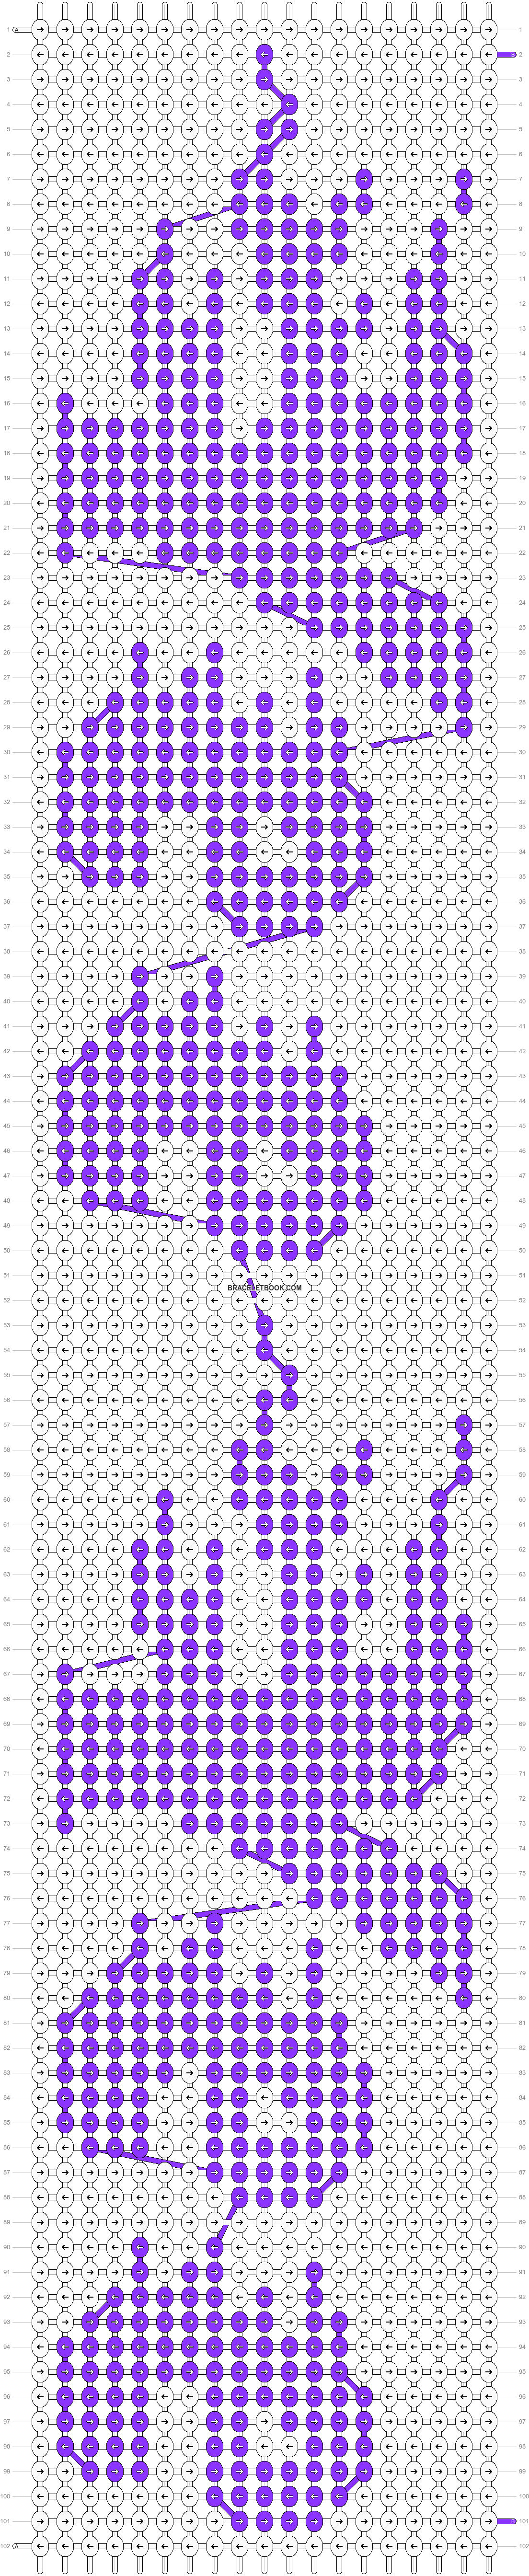 Alpha pattern #35988 variation #34463 pattern